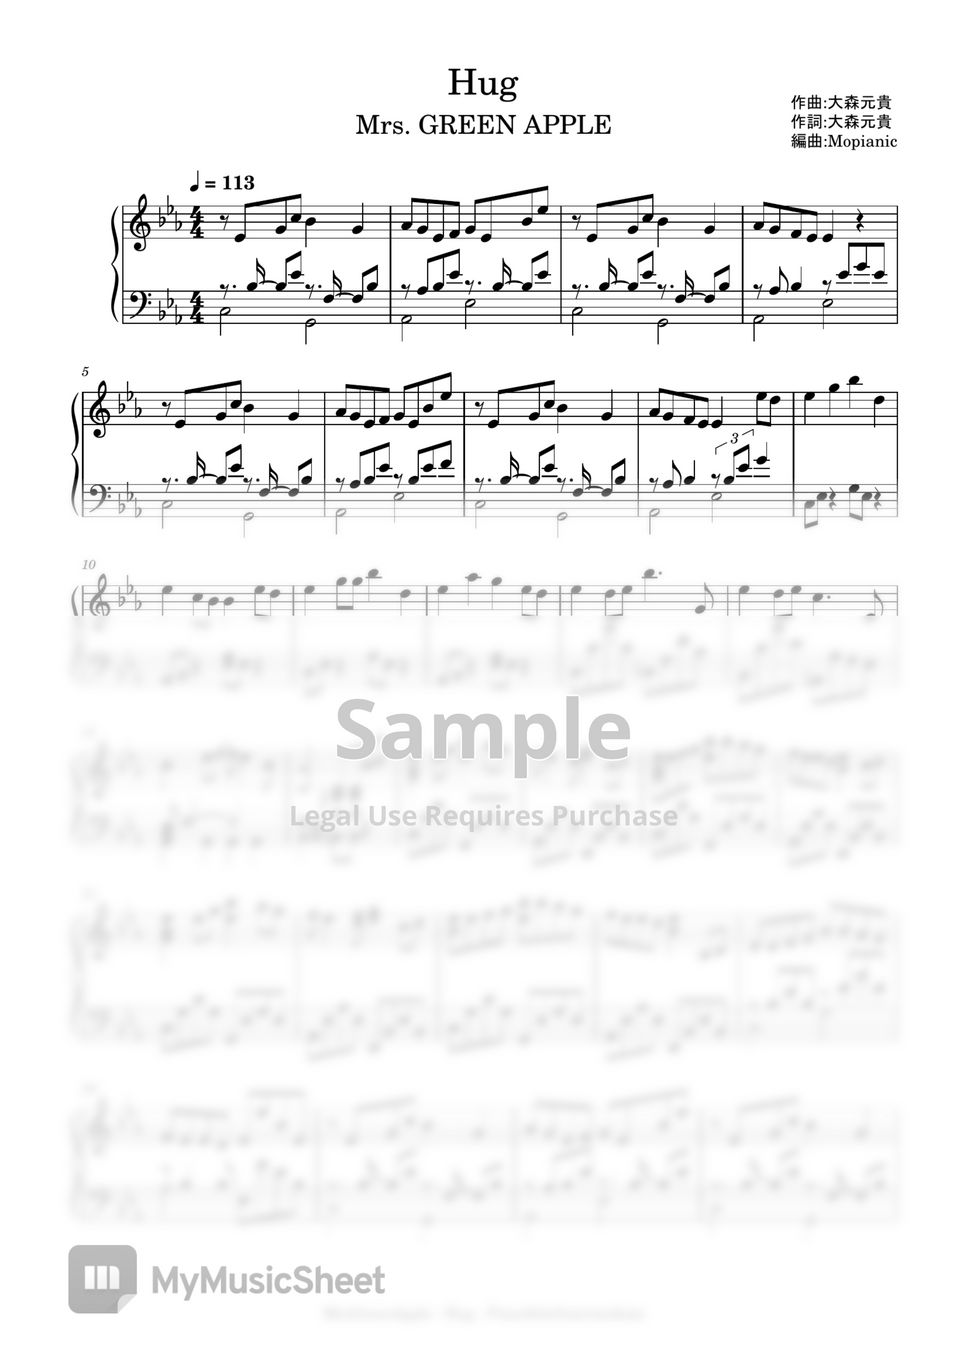 Mrs. GREEN APPLE - Hug (intermediate, piano) by Mopianic